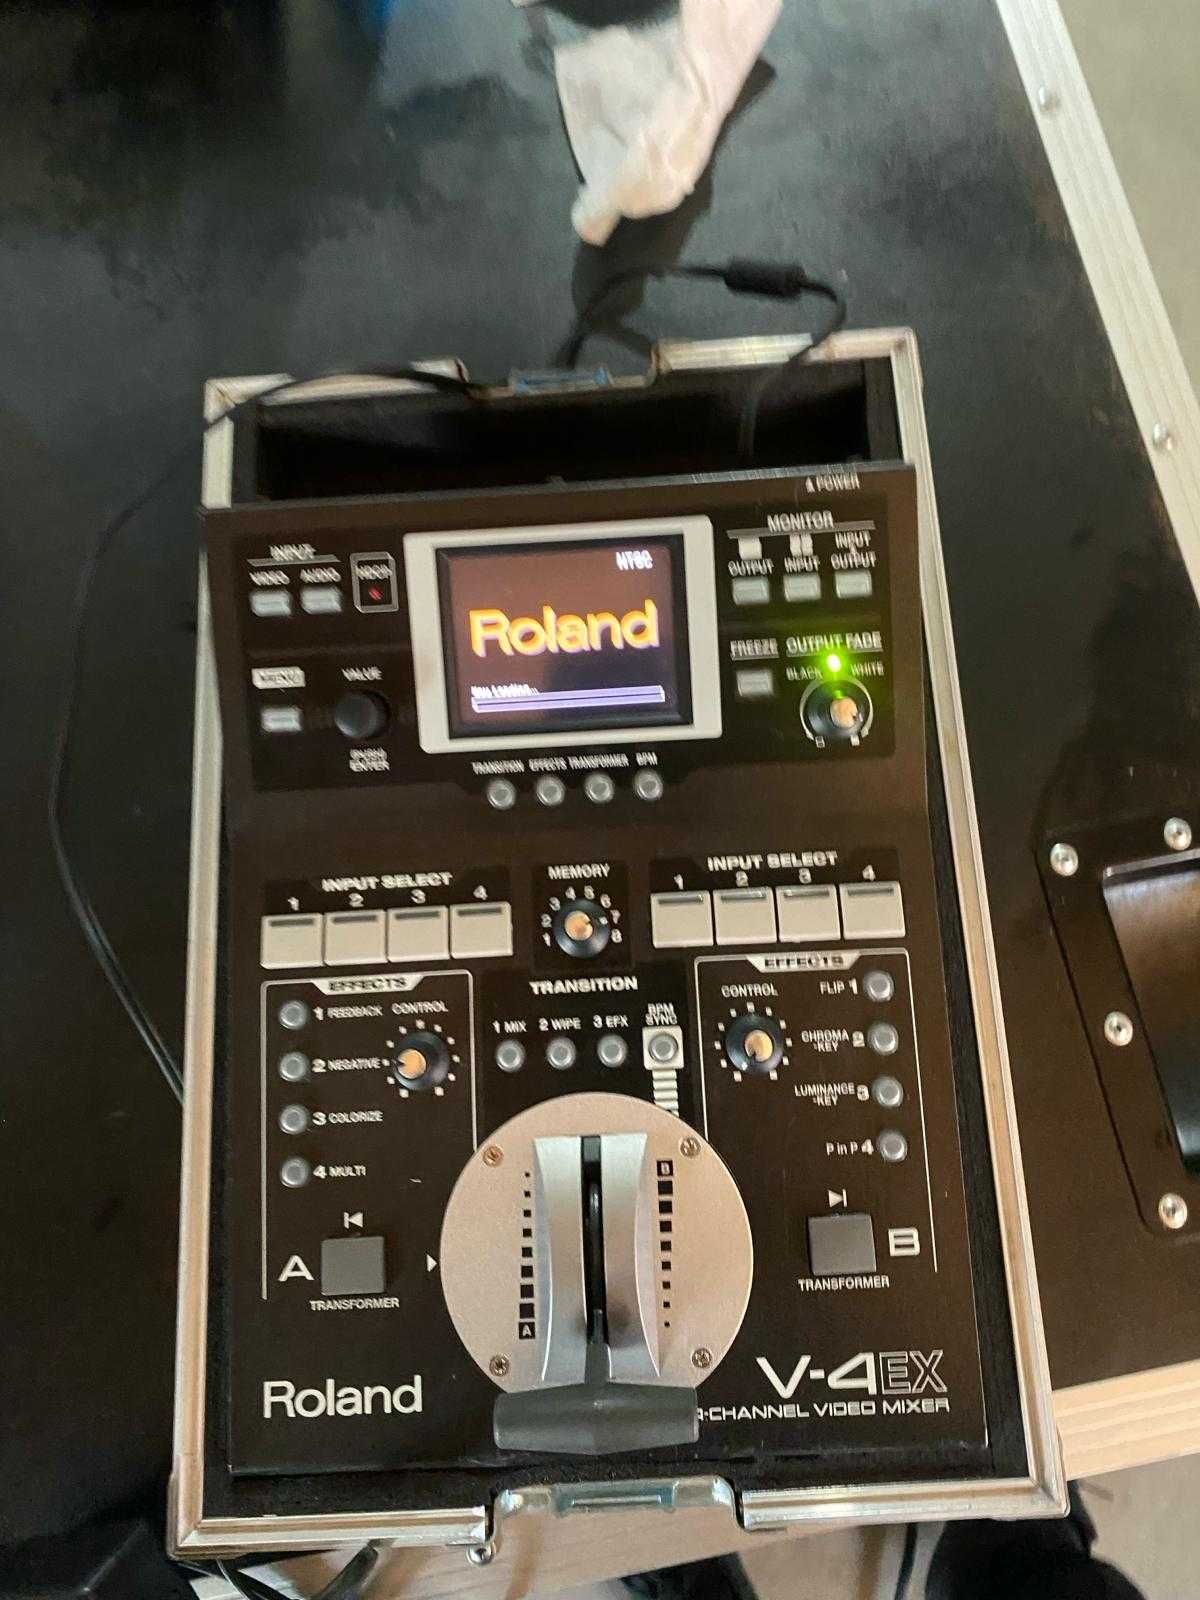 VAND mixer videor  Roland edirol EX  cu case